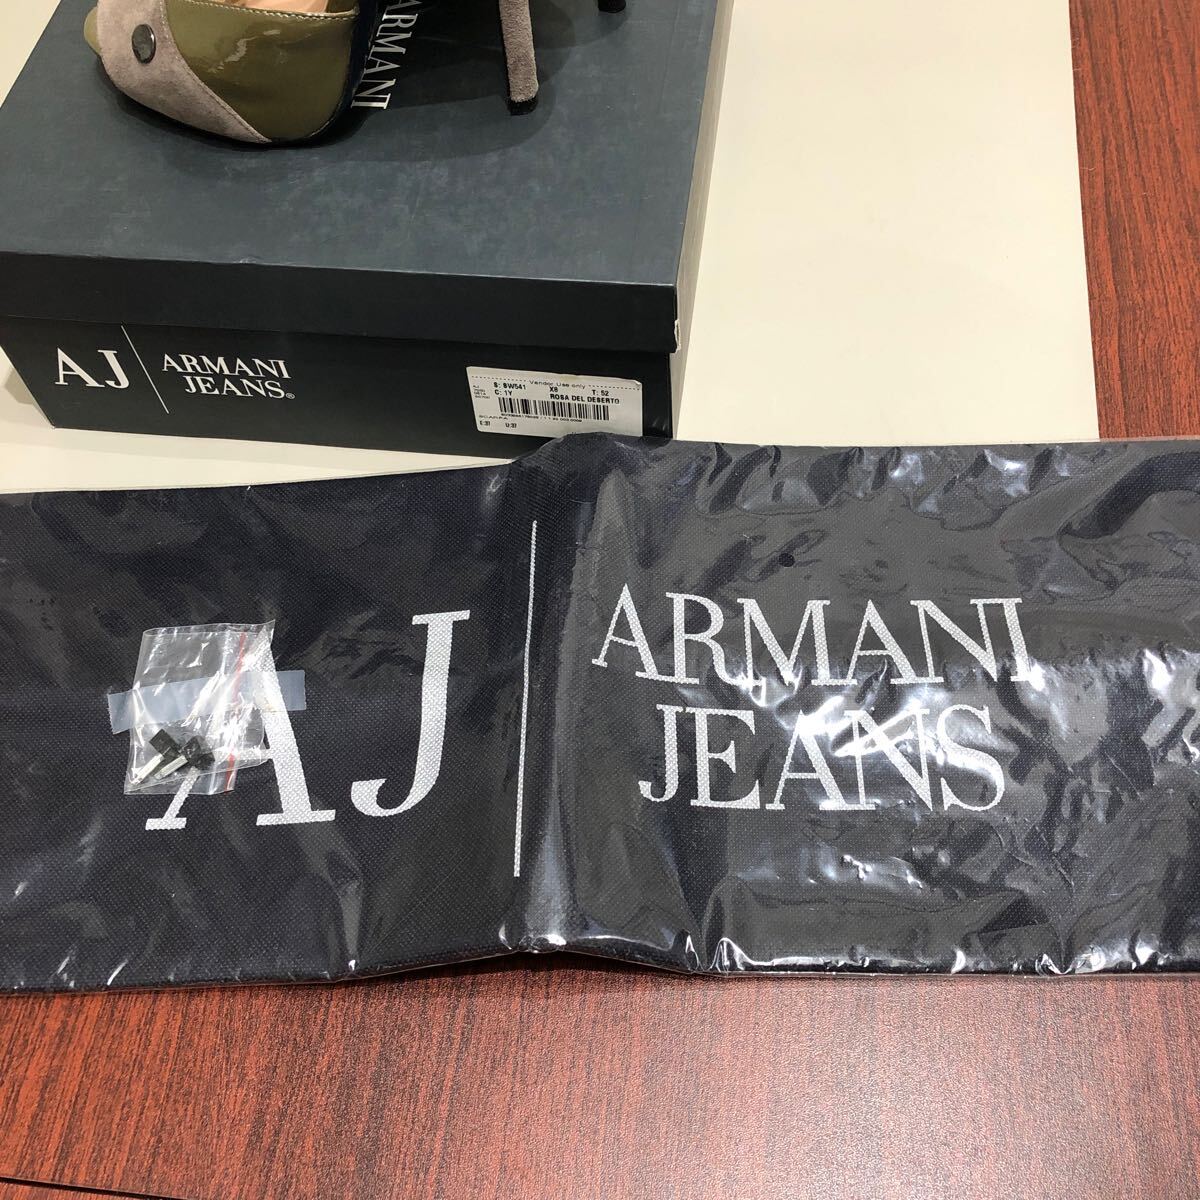 ARMANI JEANS Armani Jeans высокий каблук сандалии 37 размер замша эмаль хаки серый ROSA DEL DESERTO UJDI212201679 обувь 